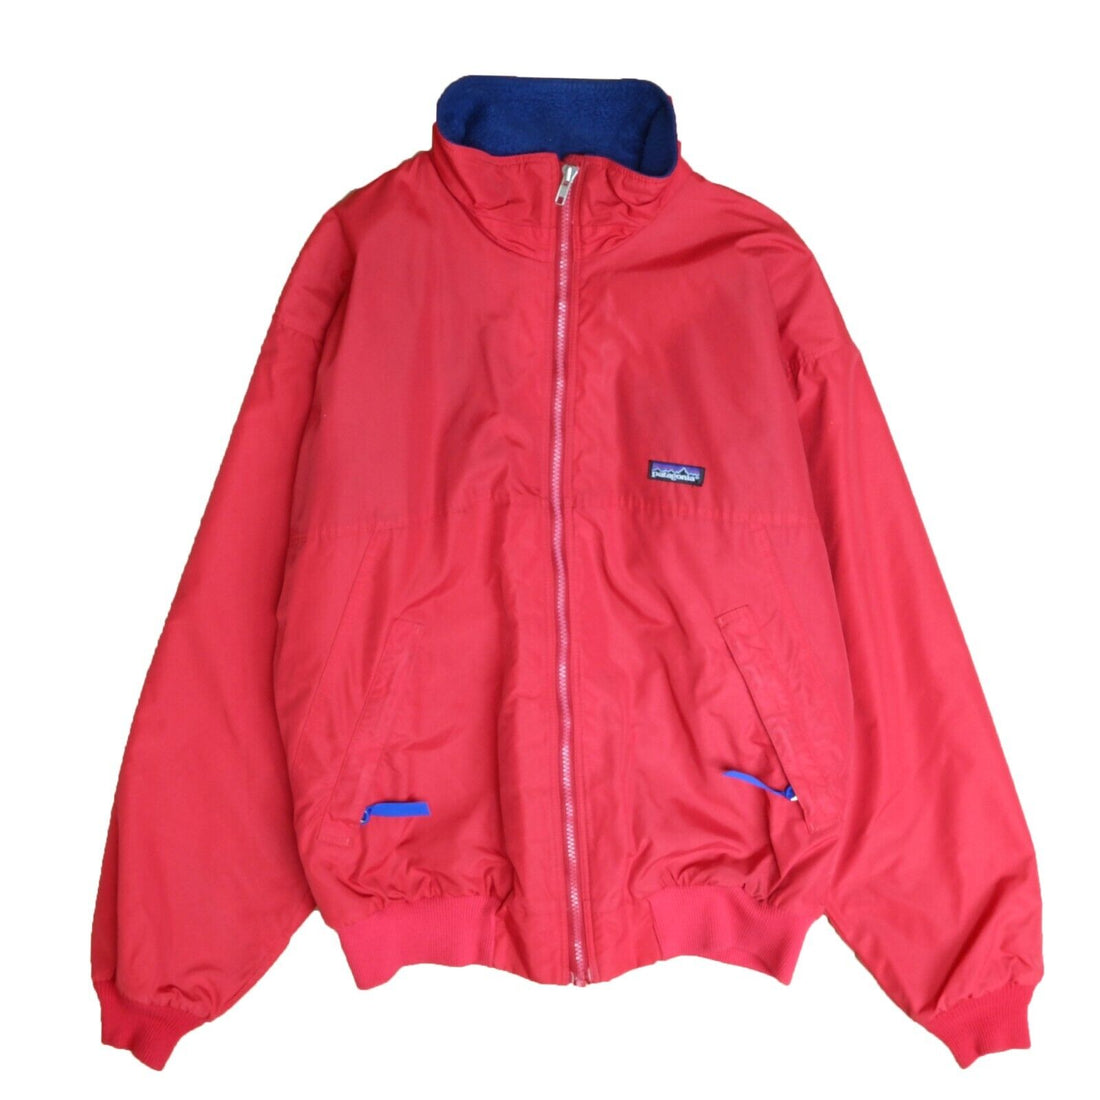 Vintage Patagonia Bomber Jacket Size Medium Red Fleece Lined